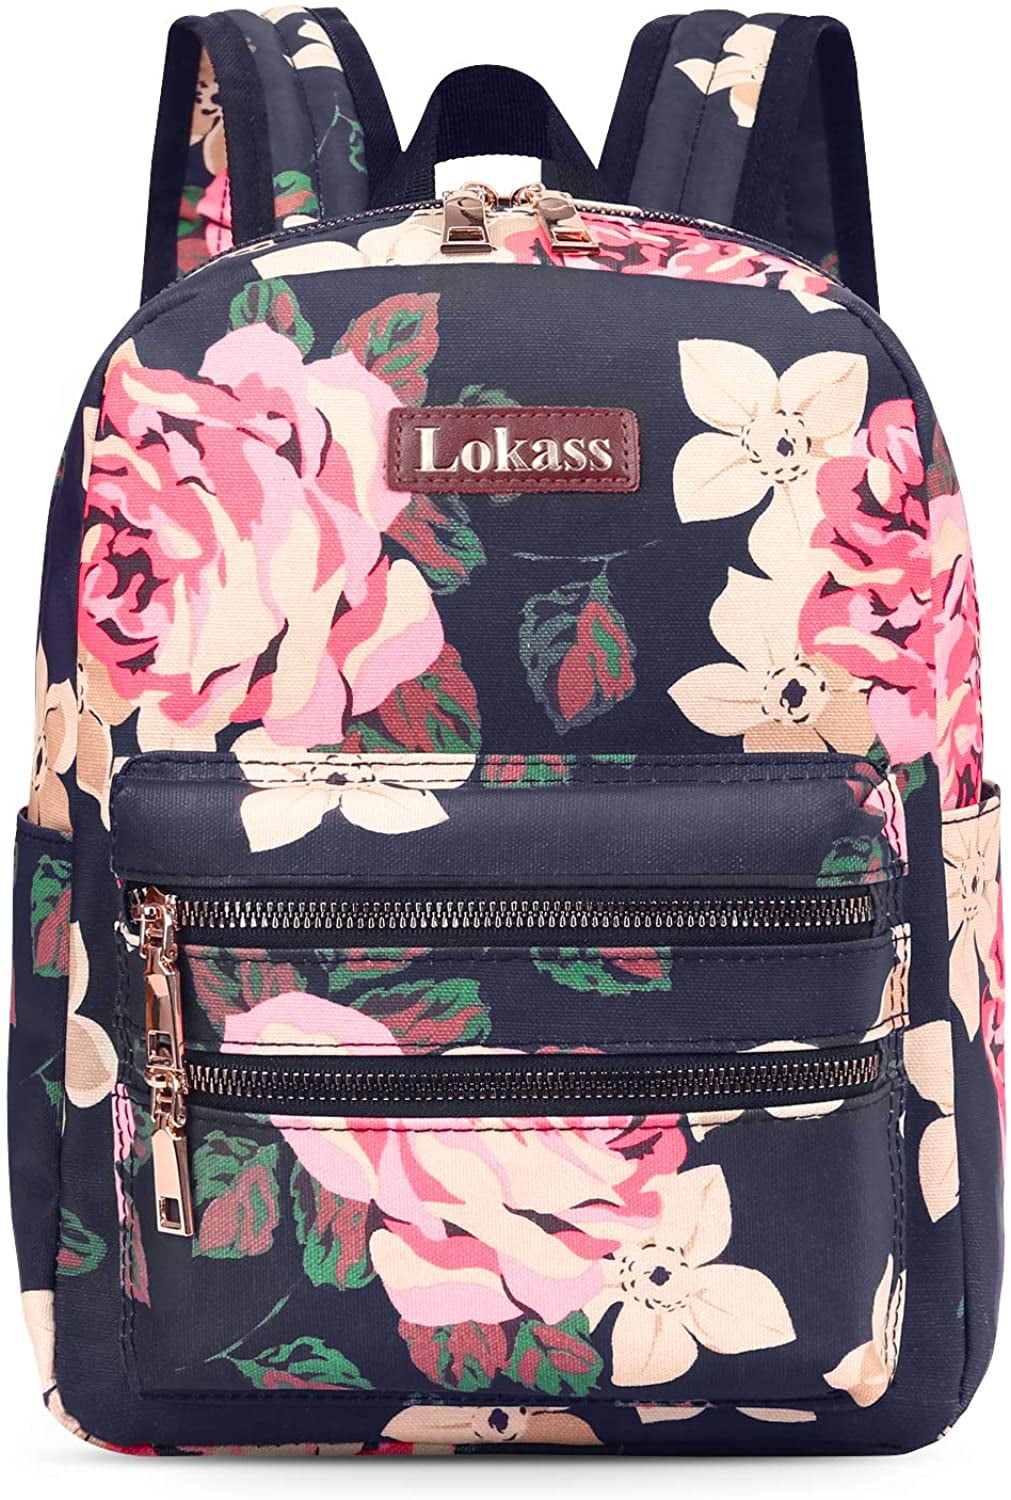 Peony Flower Print Lightweight Backpacks Casual School Bags Daypacks For Kis Adult